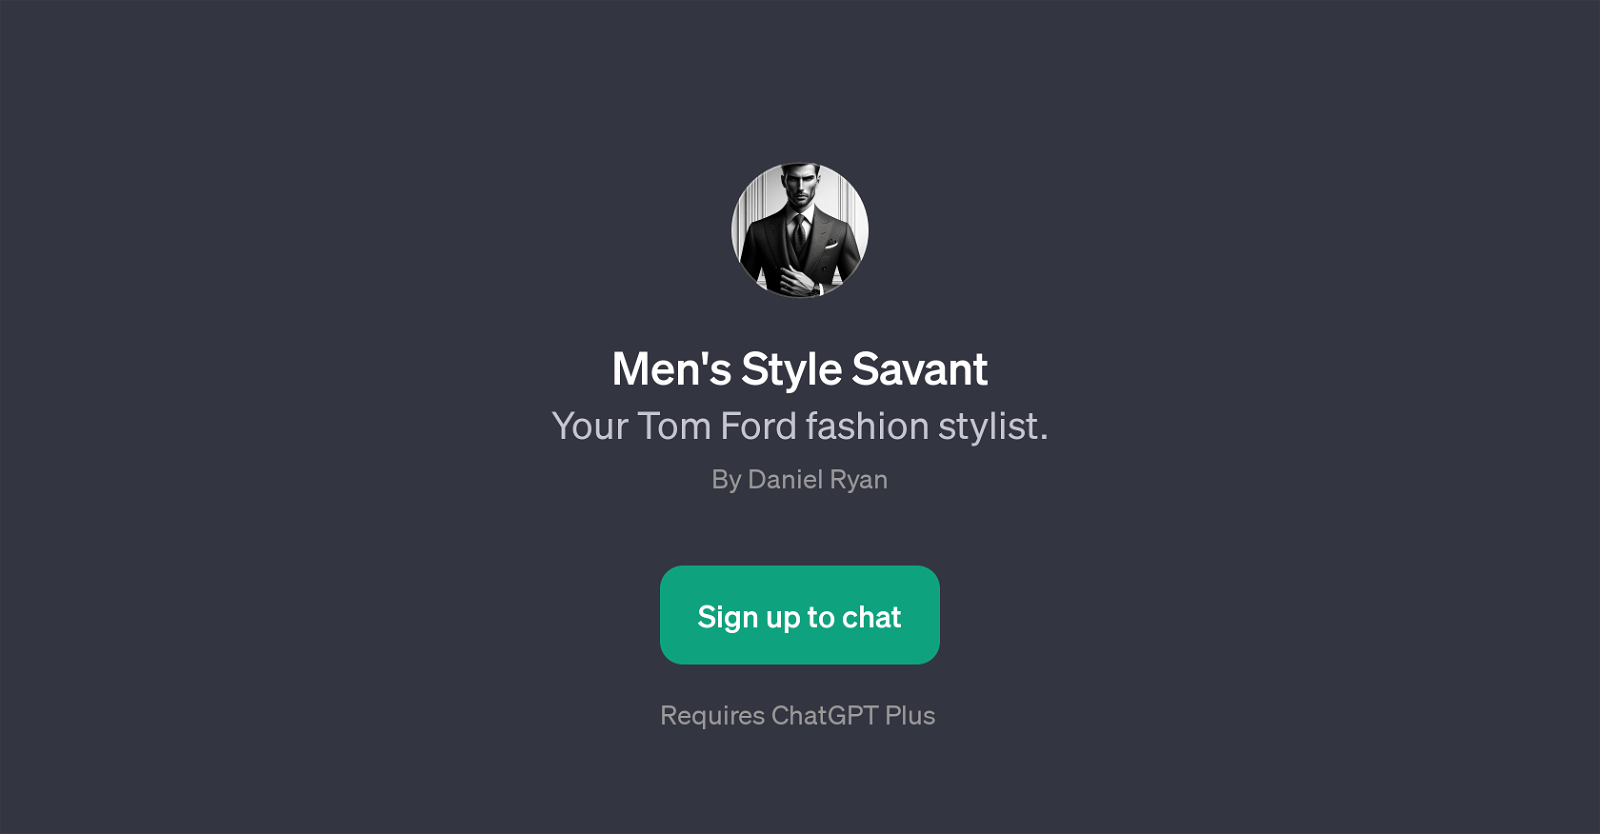 Men's Style Savant website